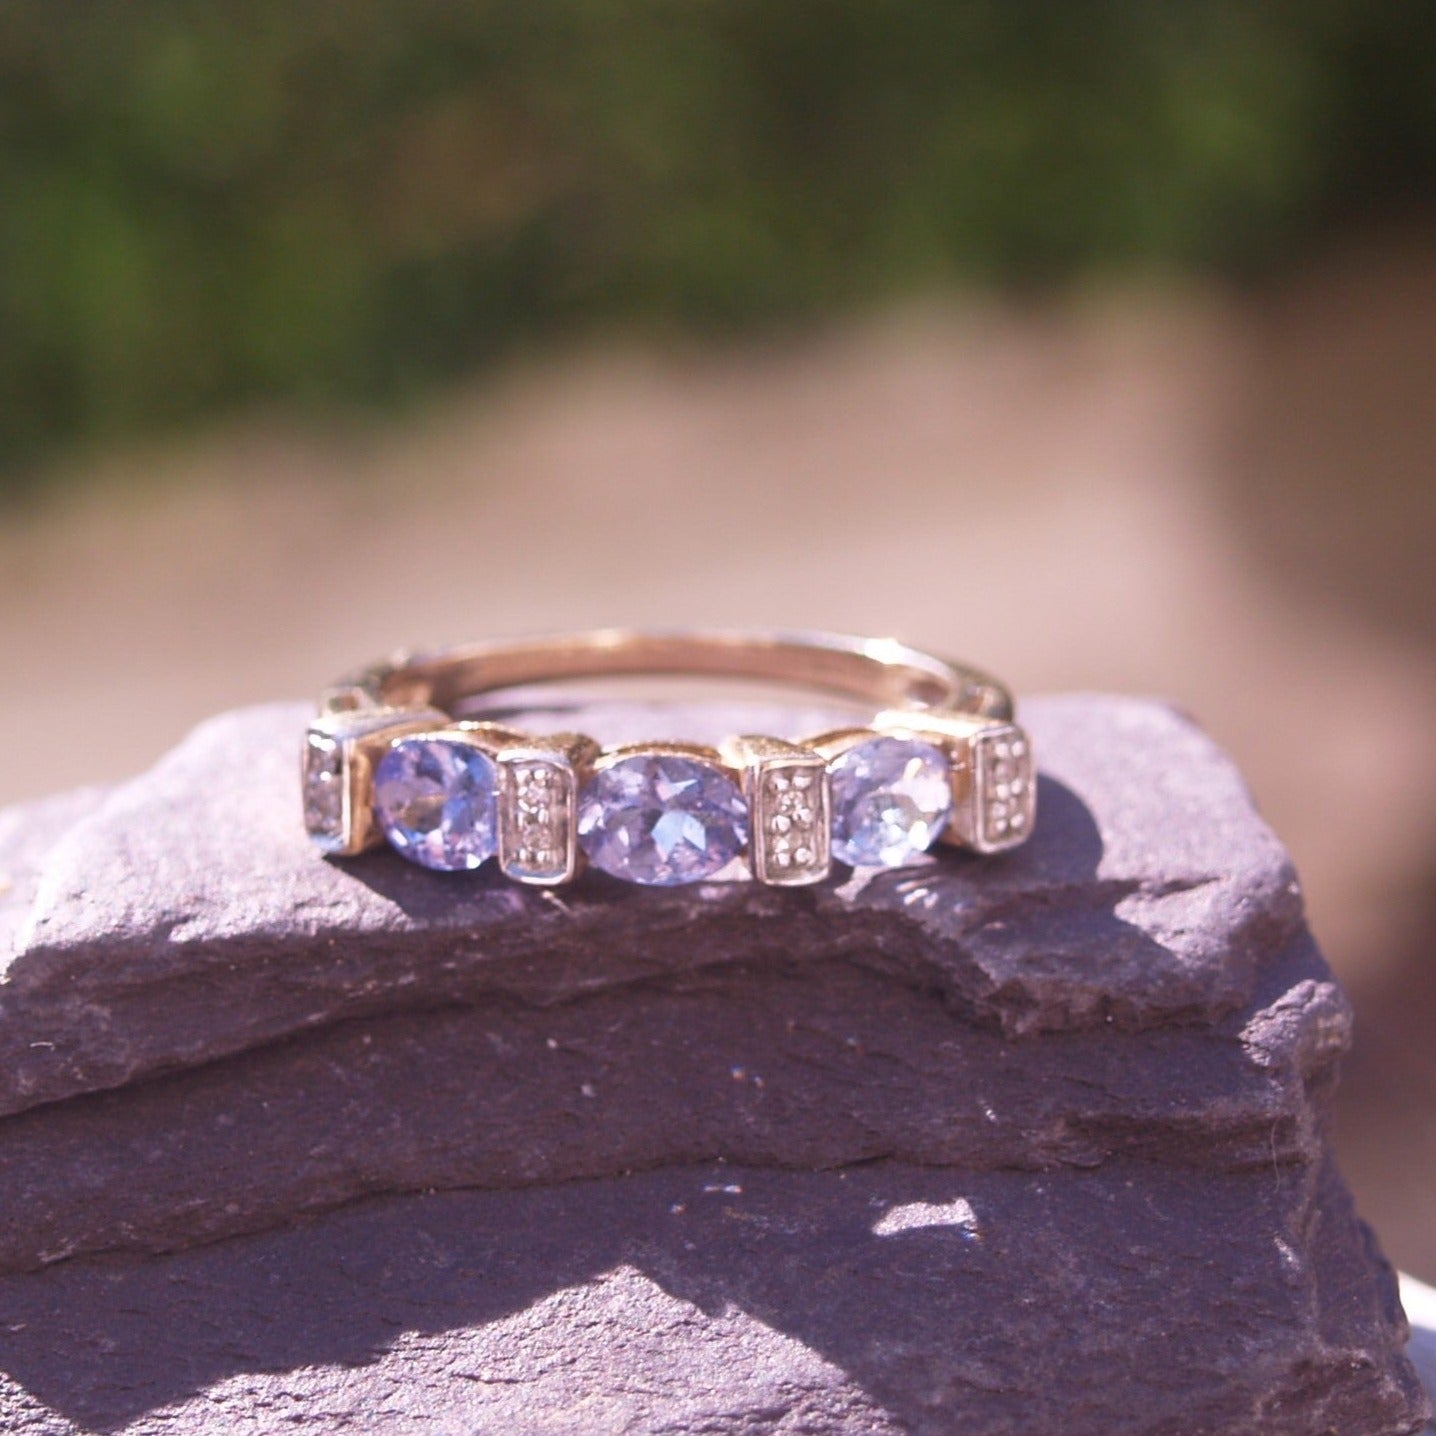 9ct Gold Tanzanite & Diamond Ring Size O or 7 USA.